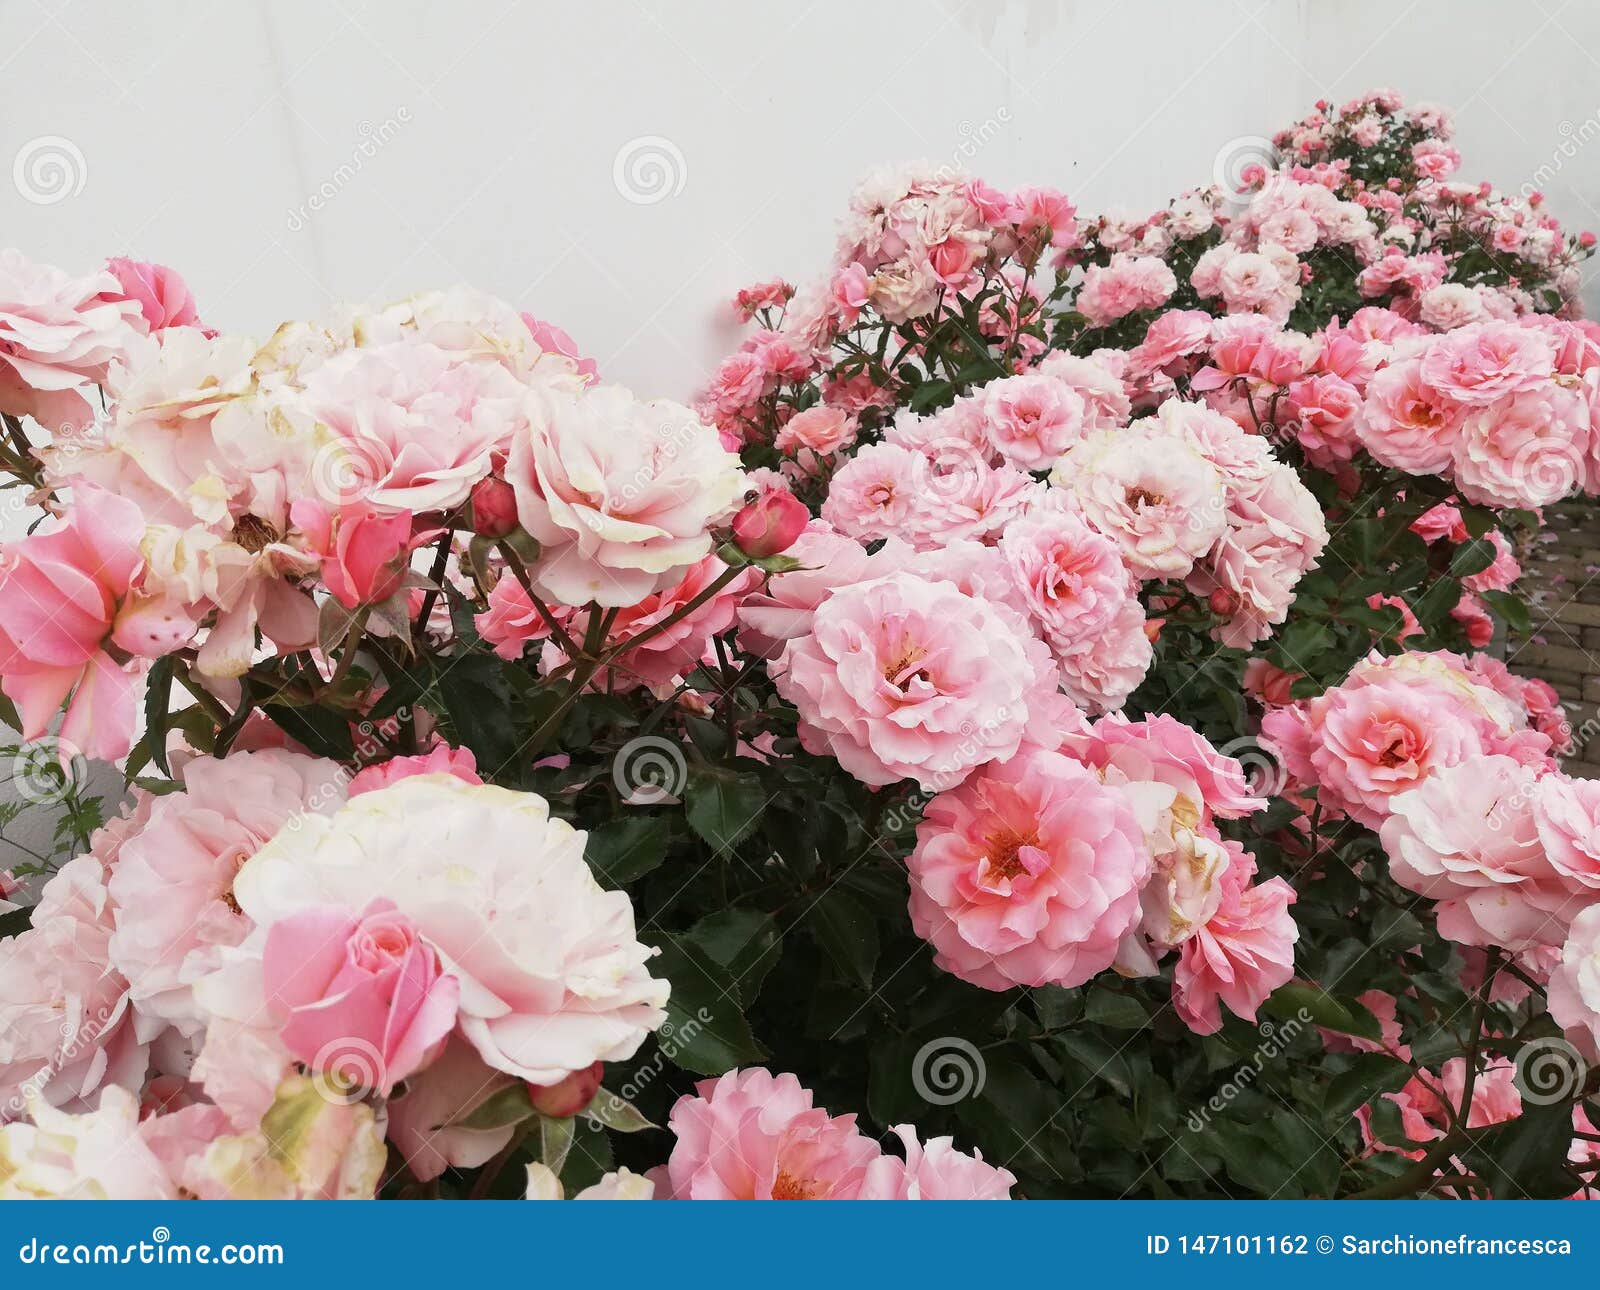 498,169 Rose Garden Stock Photos - Free & Royalty-Free Stock Photos from  Dreamstime